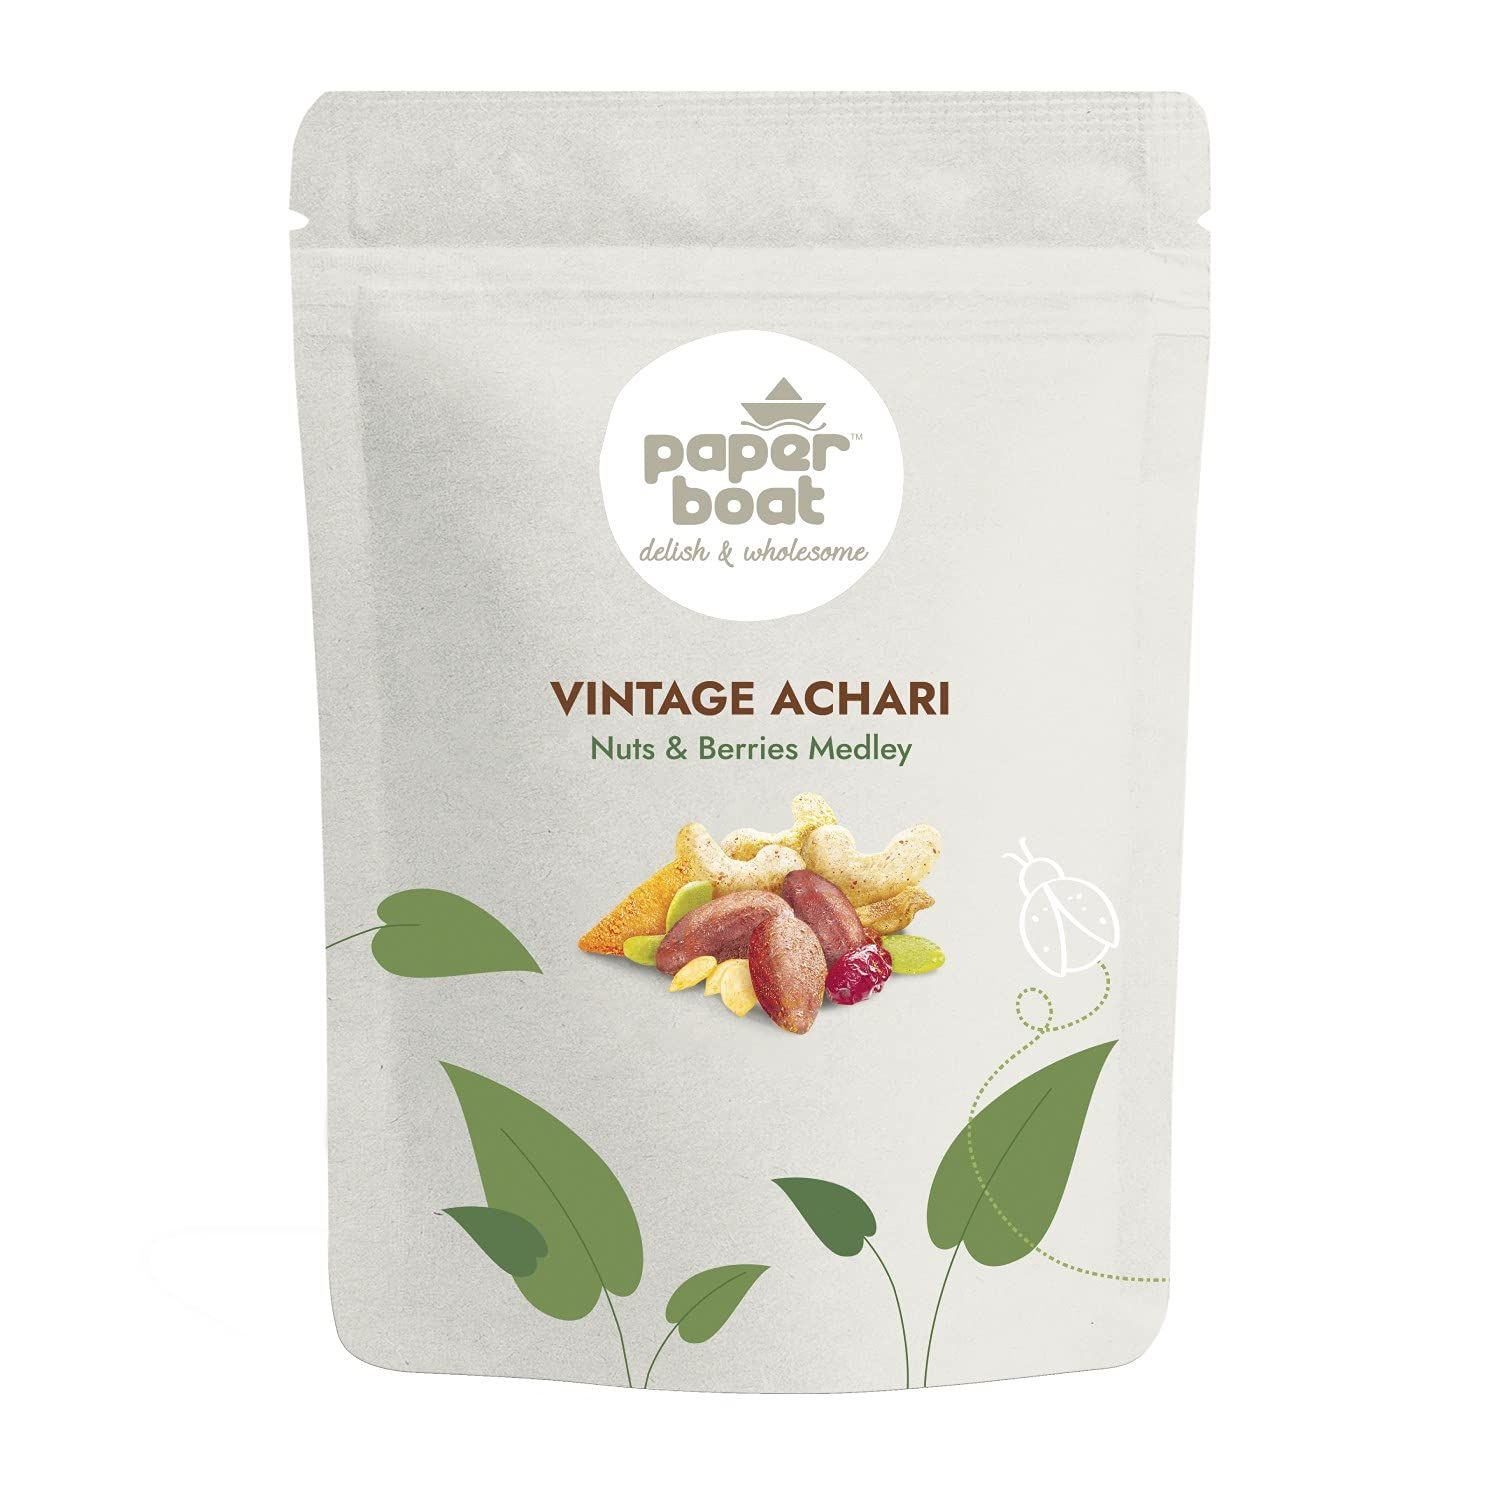 Paper Boat Vintage Achari Nuts & Berries Medley Trail Mix Image